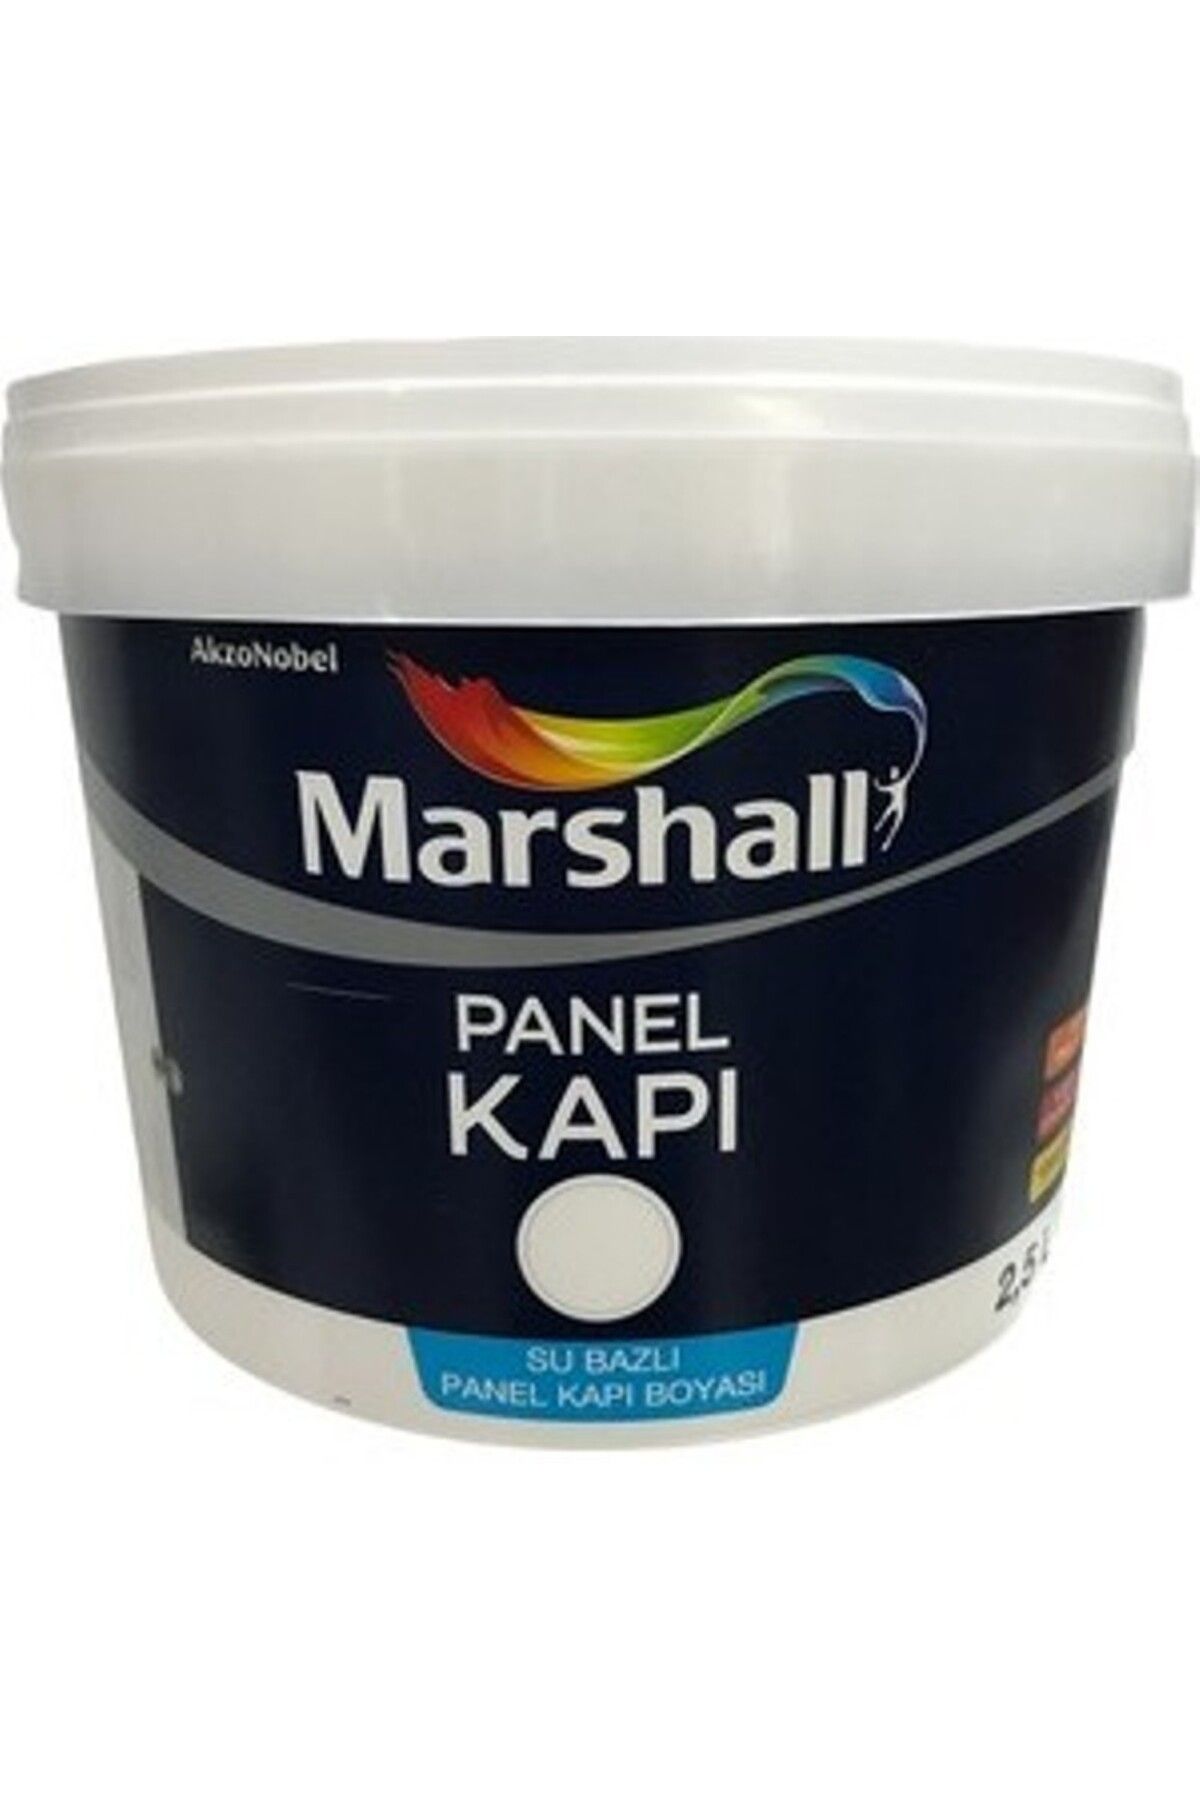 Marshall Panel Kapı Boyası 2,5 litre - GRİ KAYRAK